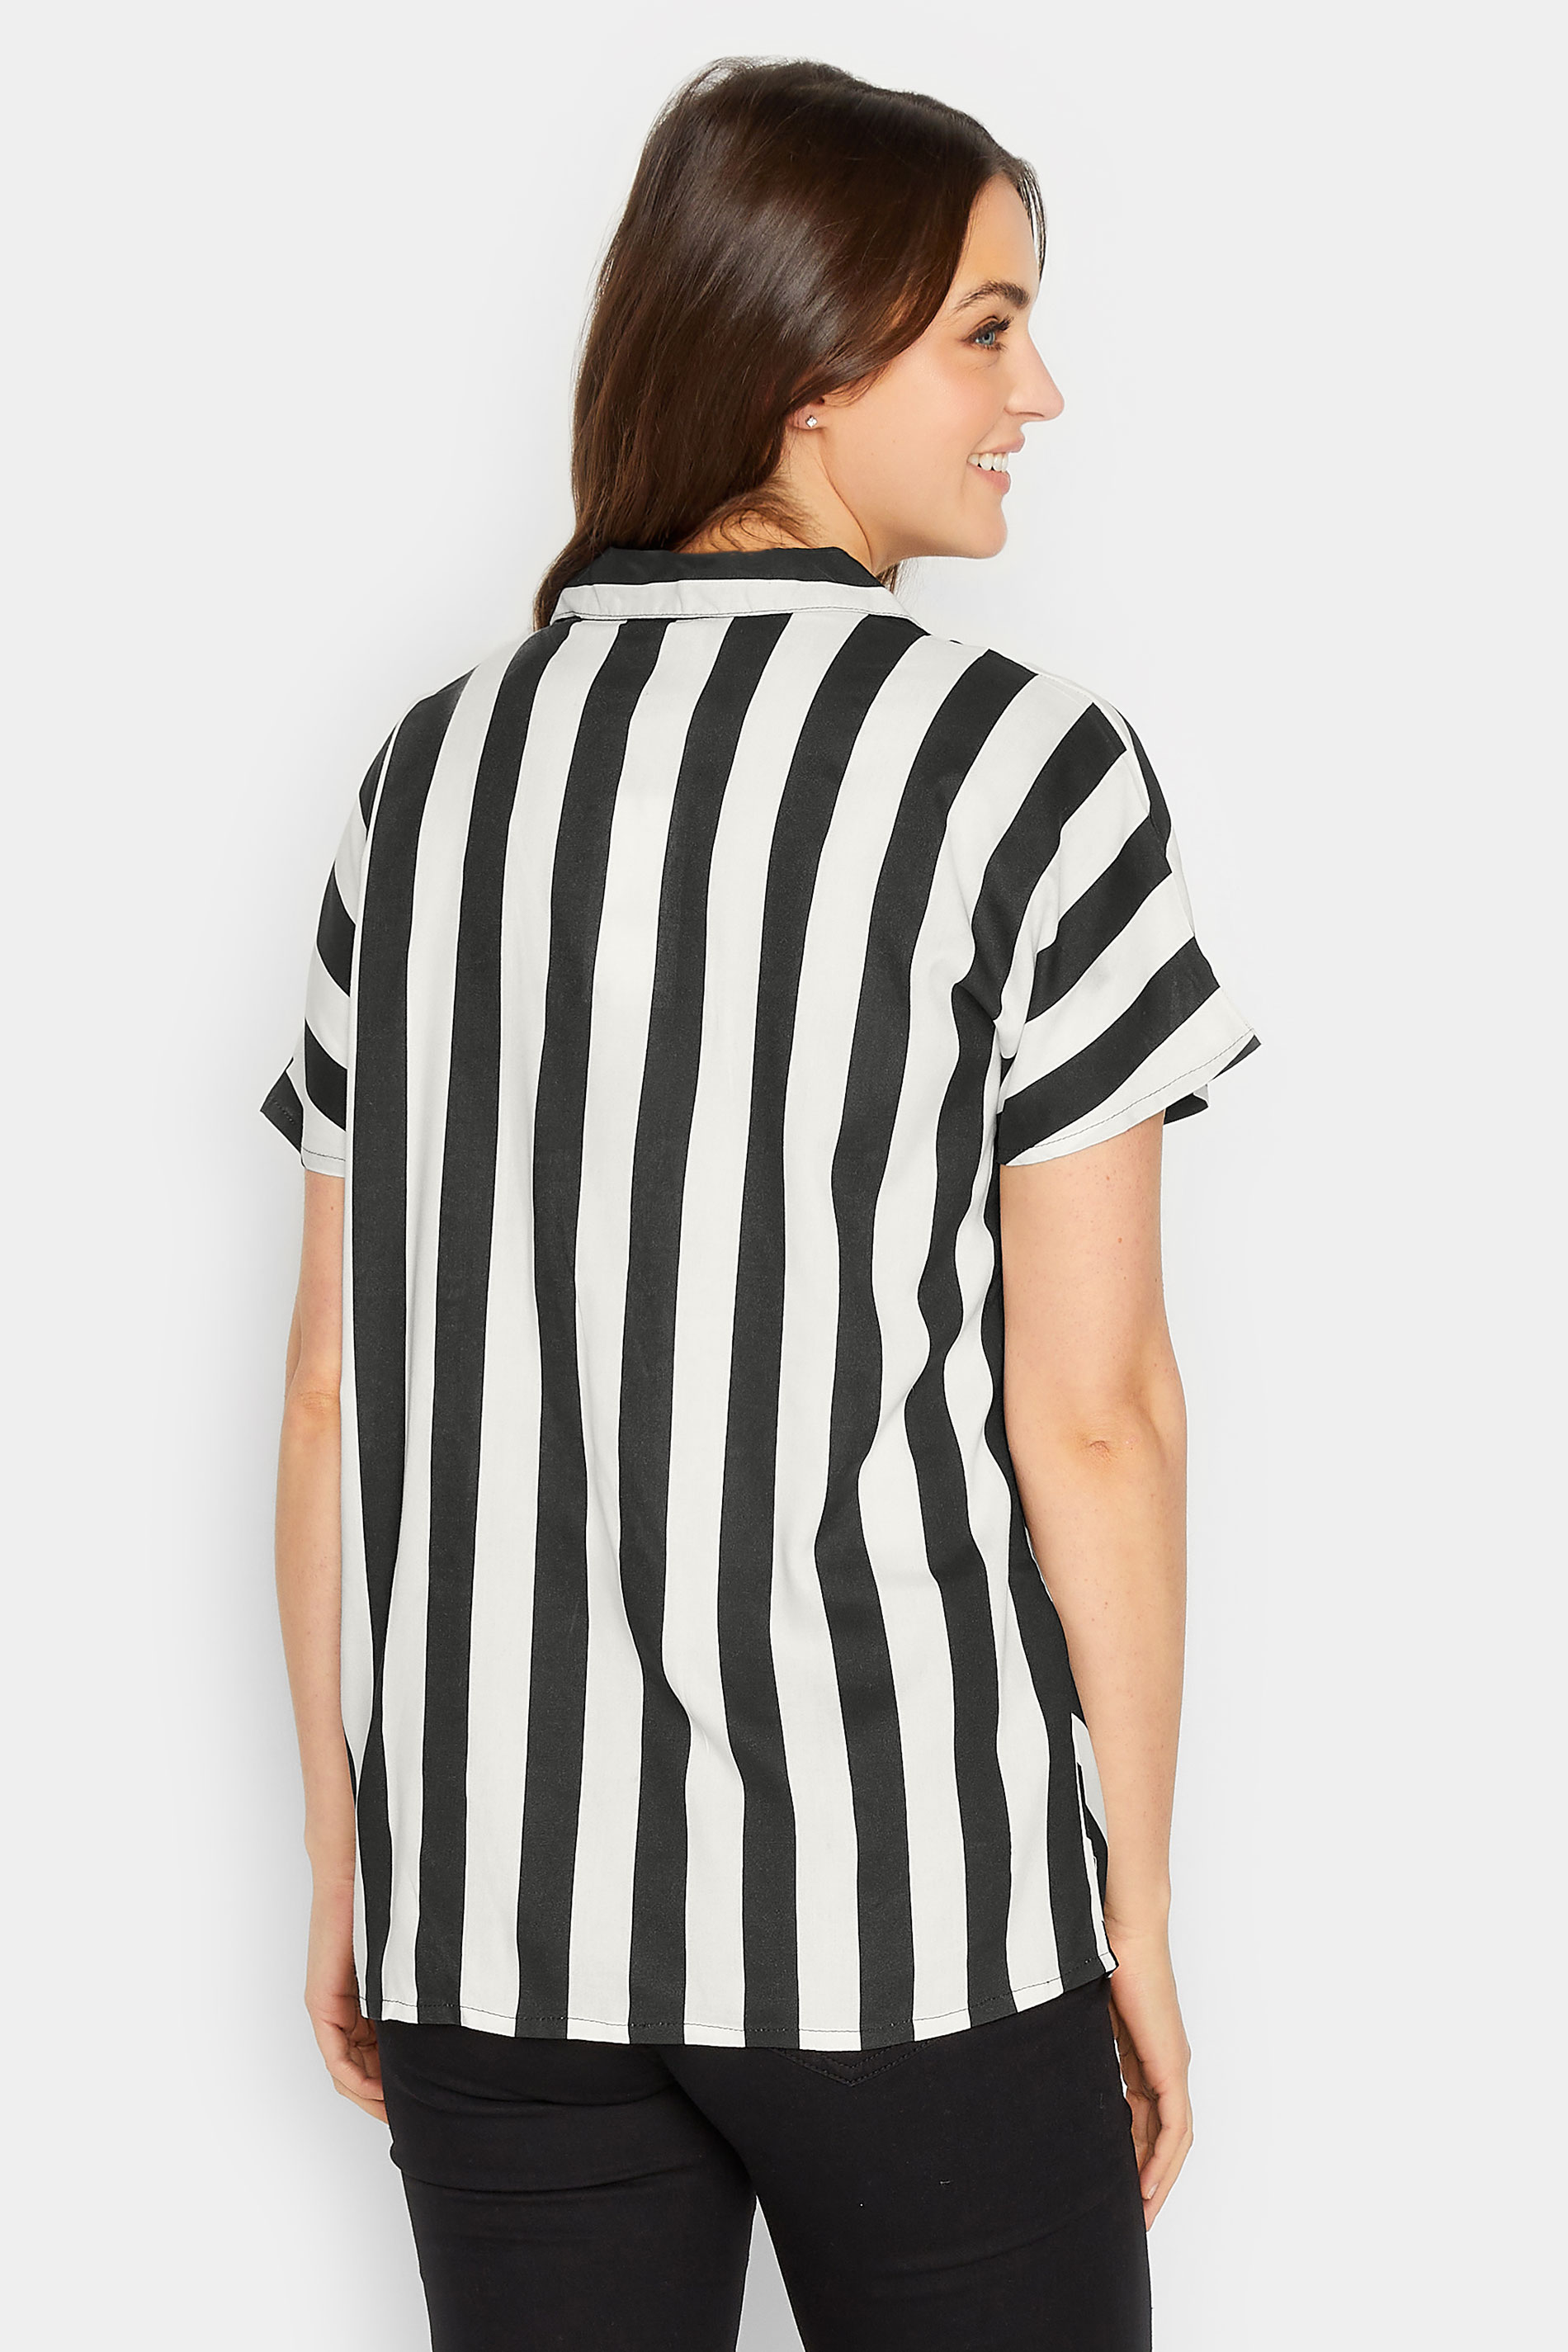 LTS Tall Women's Black & White Stripe Shirt | Long Tall Sally 3